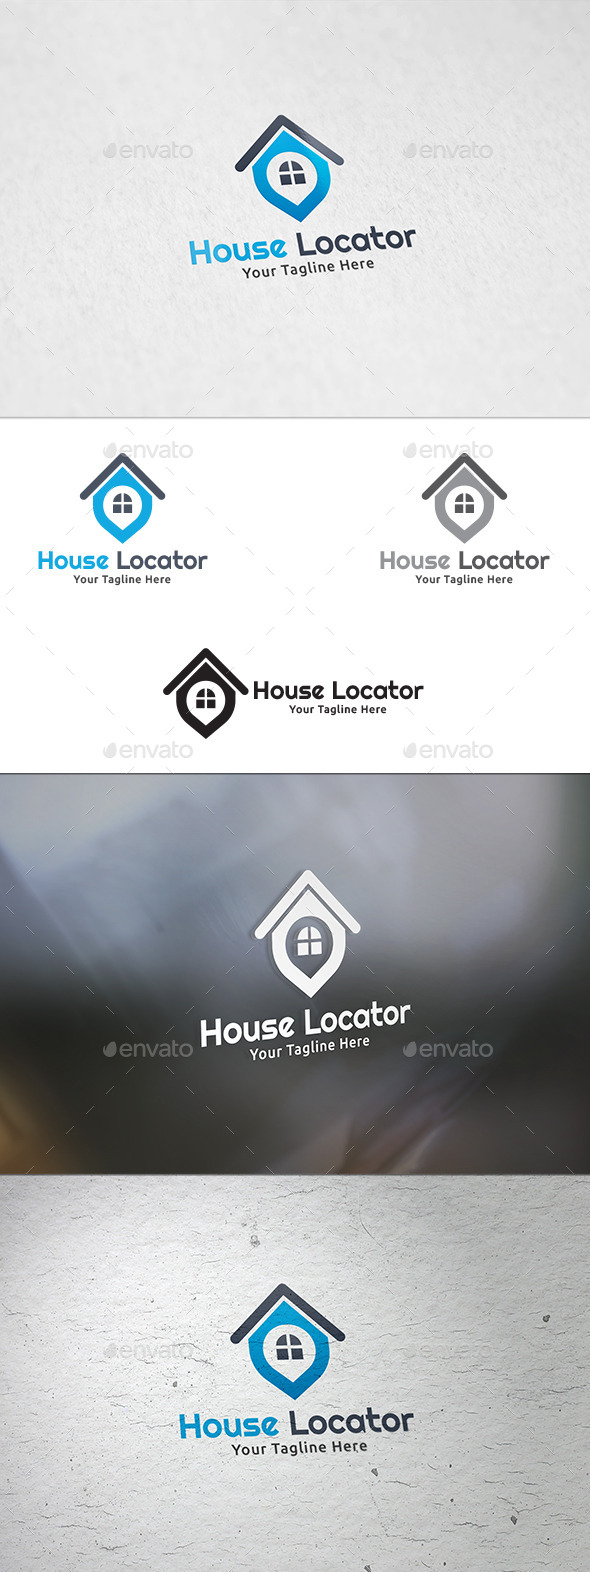 House Locator - Logo Template